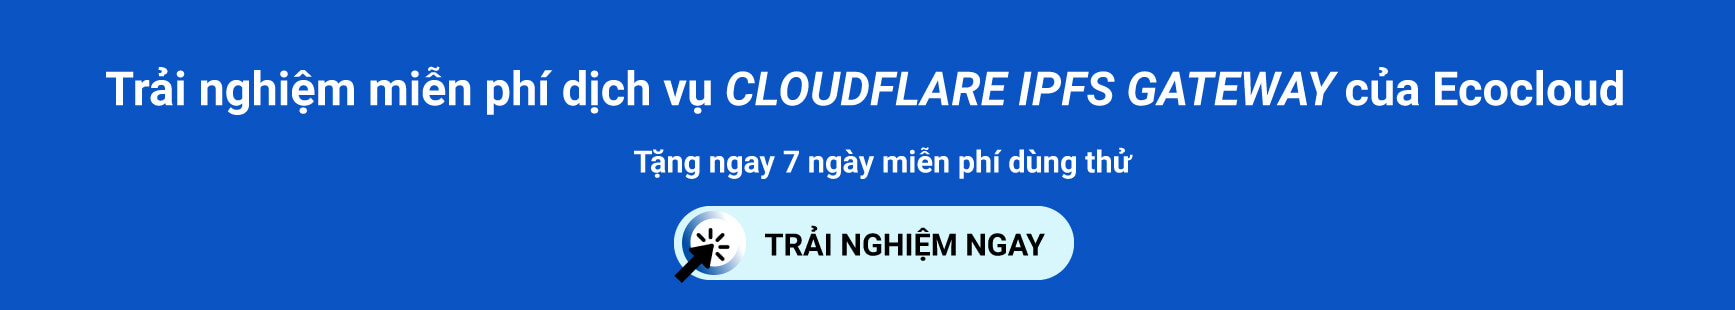 banner-cloudflare-ipfs-gateway